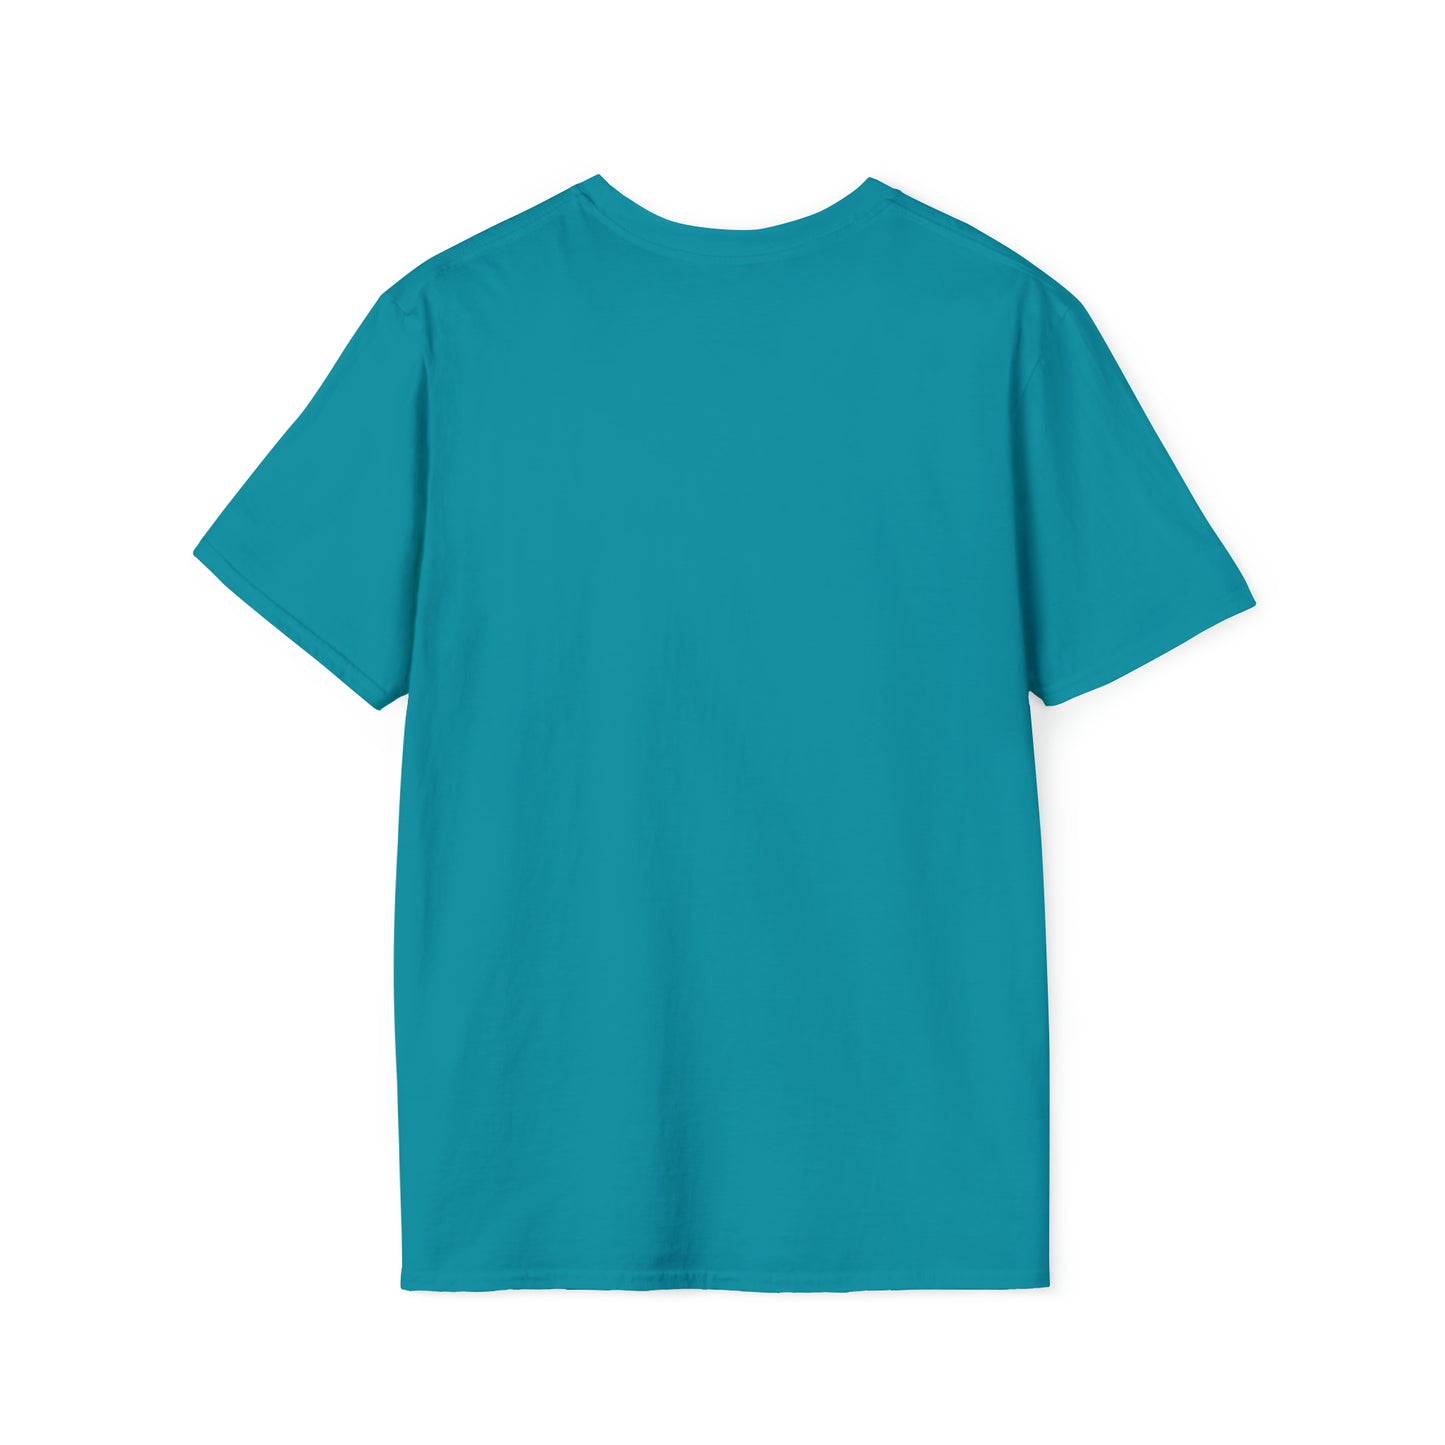 OB Nurse, Obstetrics Nurse, Nurse Gift, Preceptor Gift, Unisex Softstyle T-Shirt